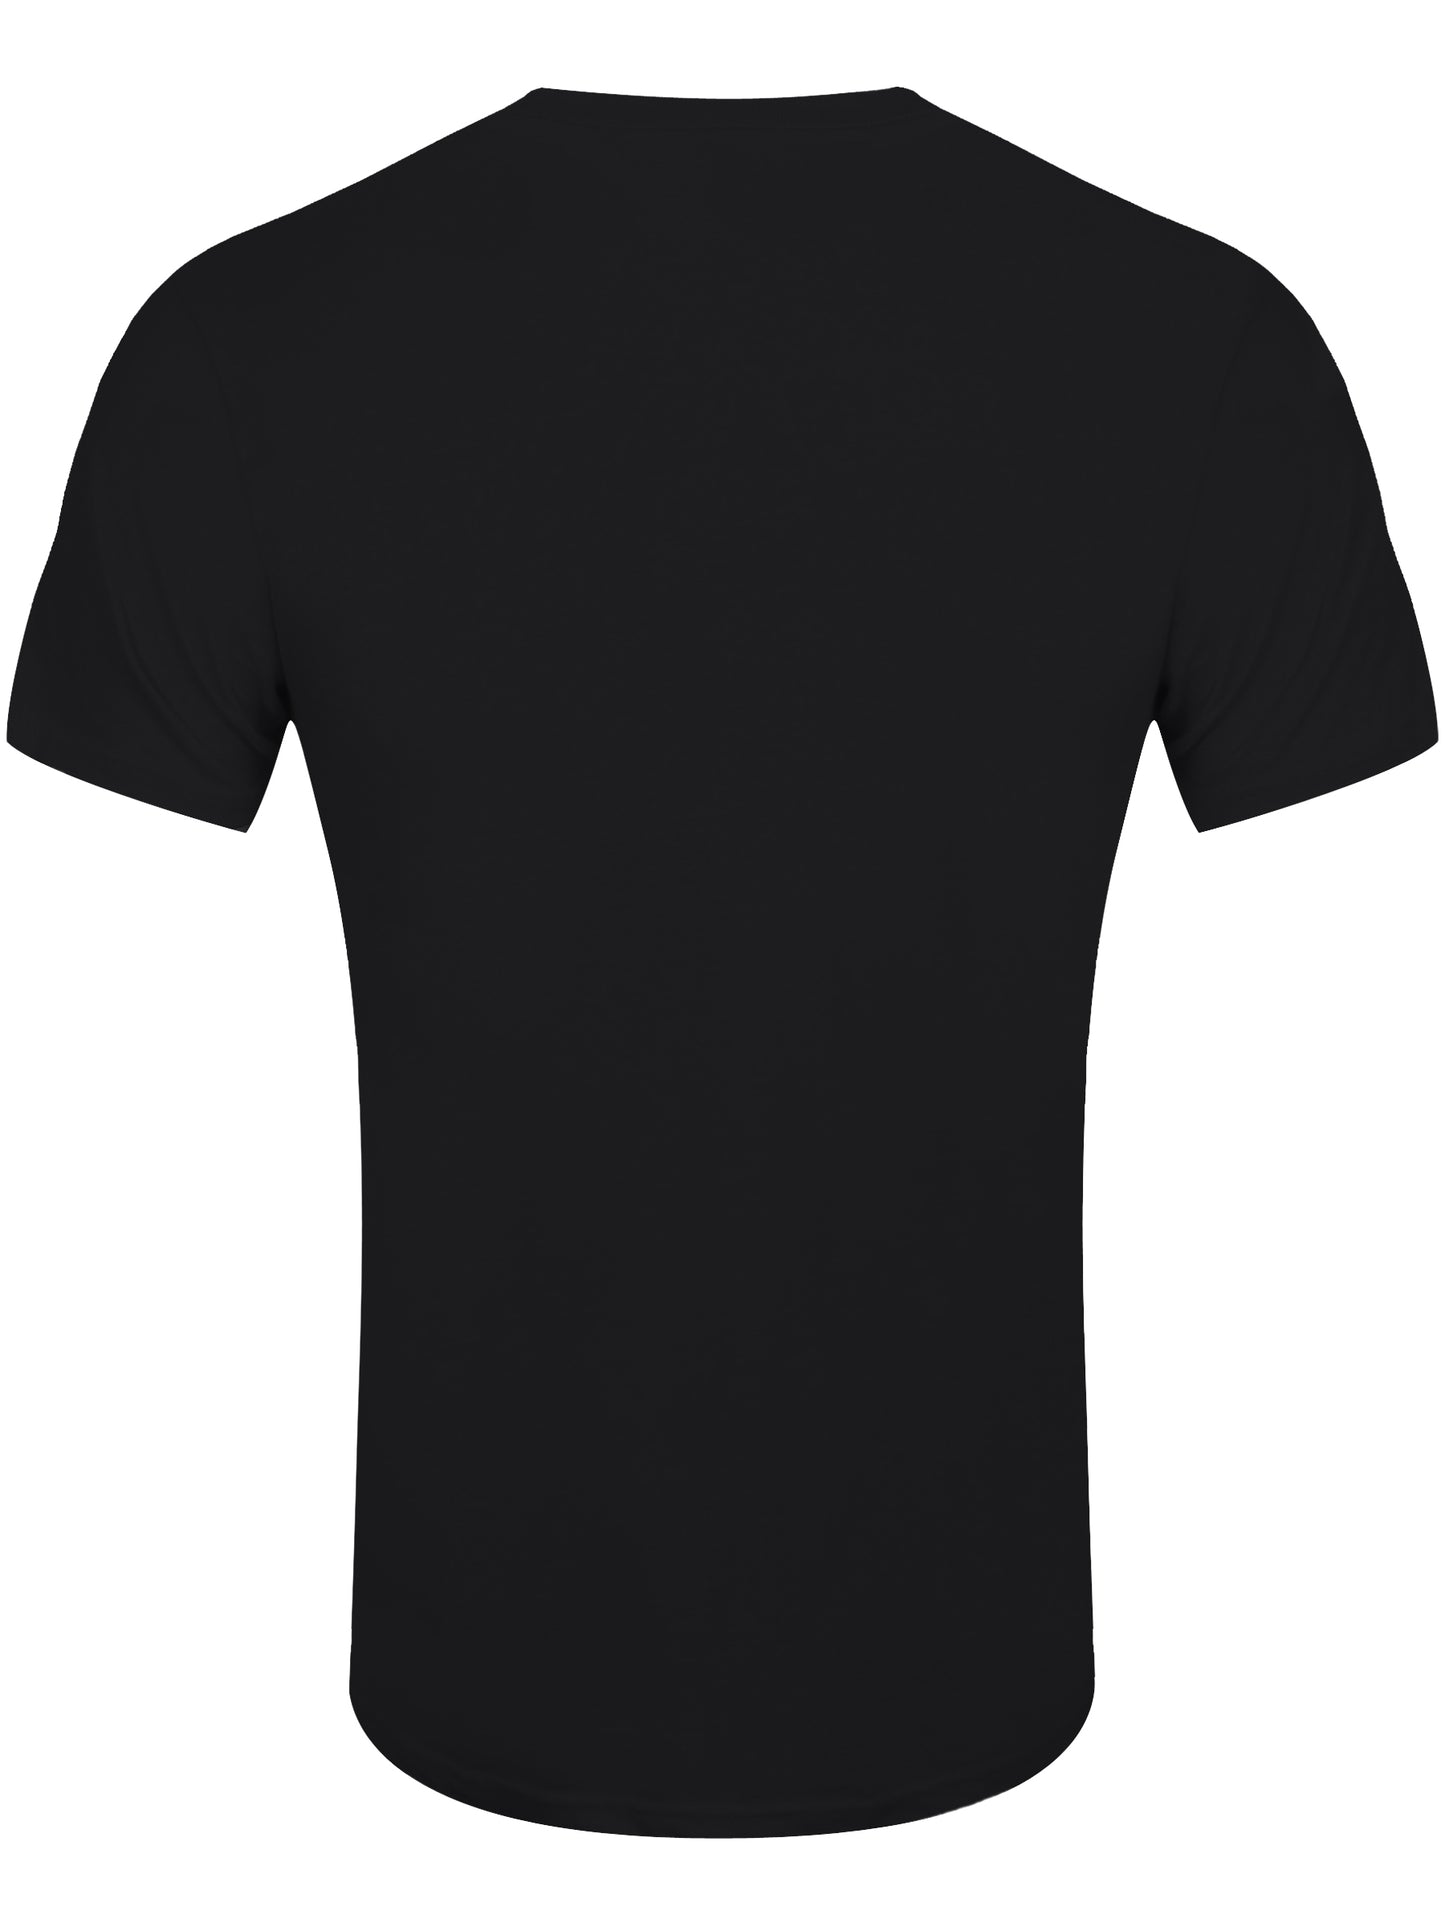 Johnny Cash Outlaw Men's Black T-Shirt